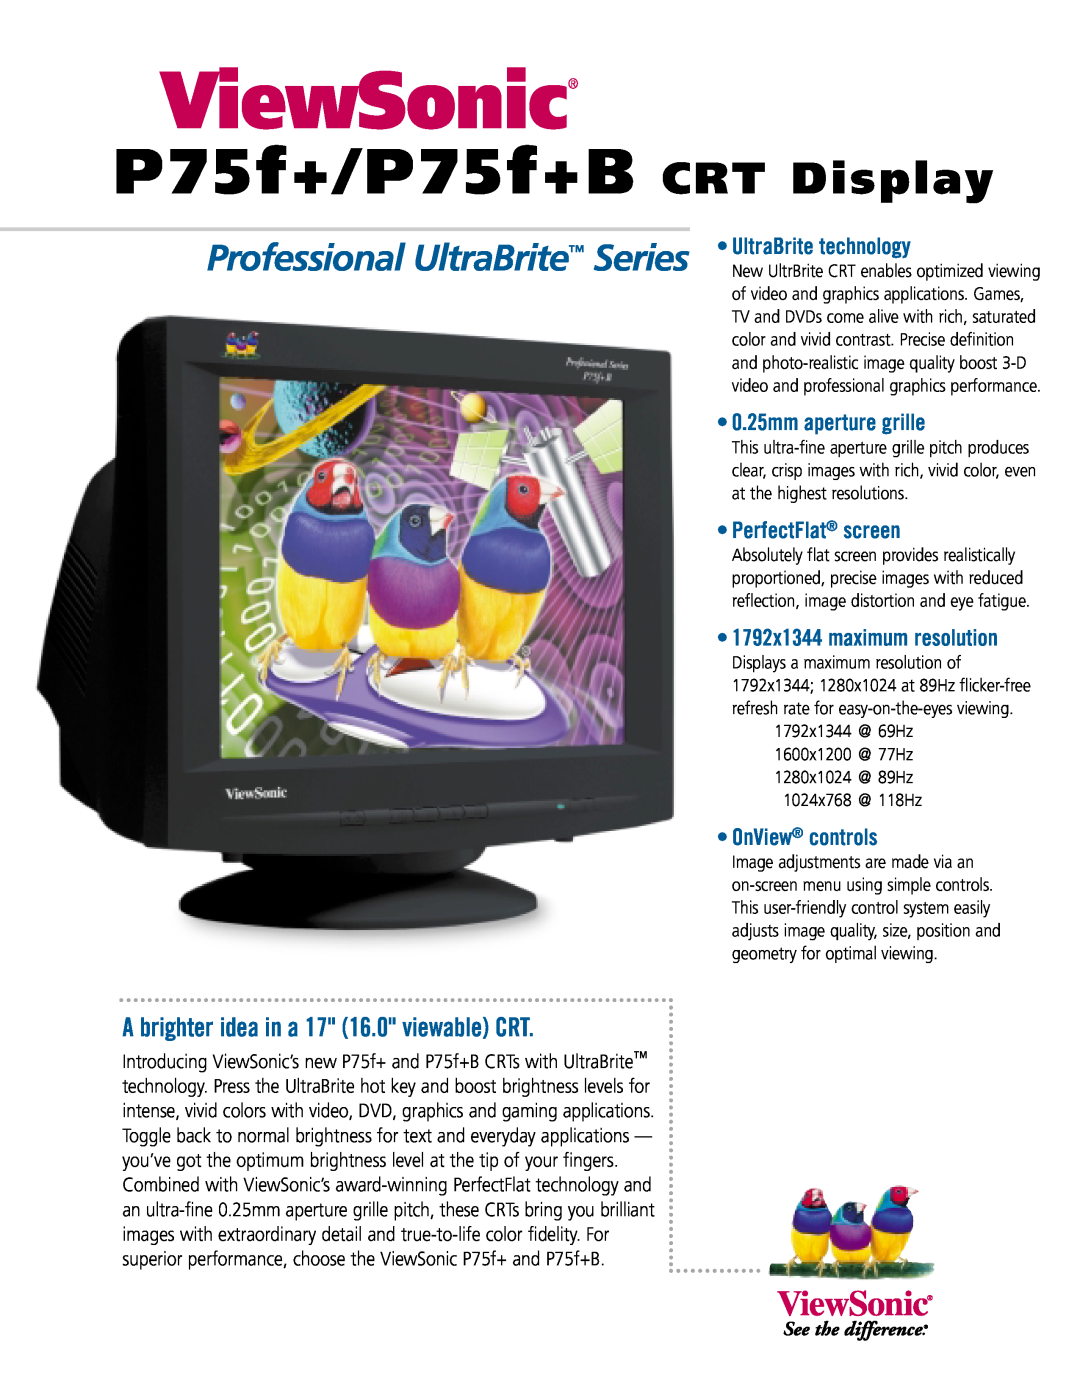 ViewSonic P75F+B manual P75f+/P75f+B CRT Display, UltraBrite technology, 0.25mm aperture grille, PerfectFlat screen 